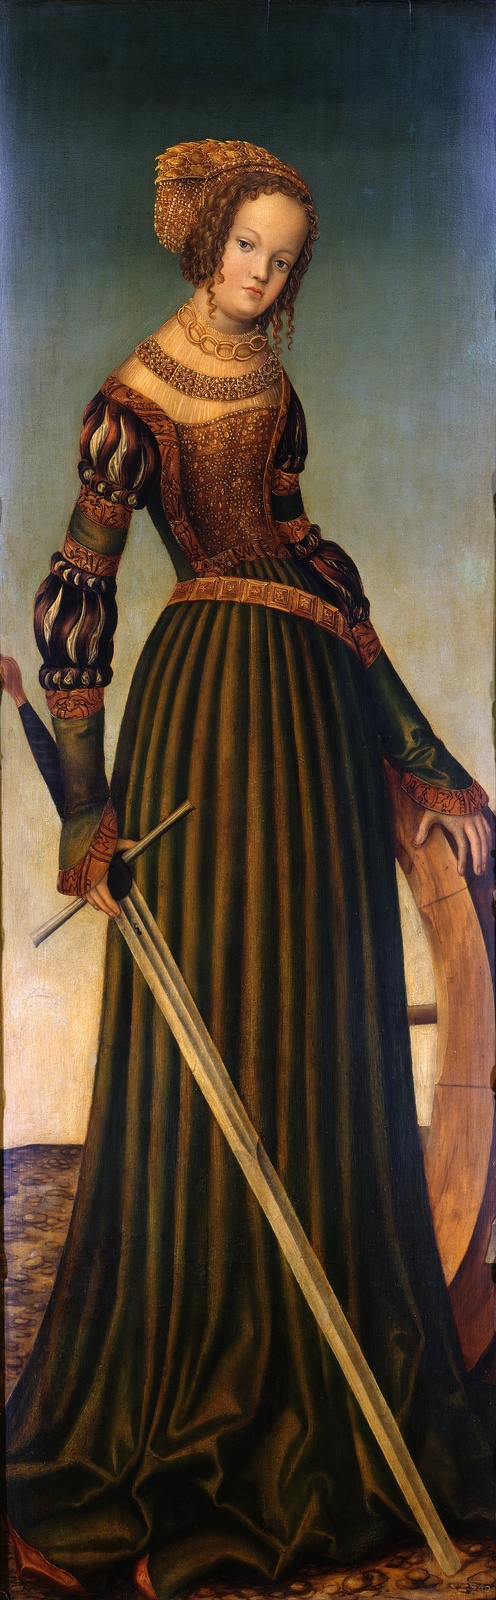 Lucas Cranach the Elder. St. Catherine (wing of altar)